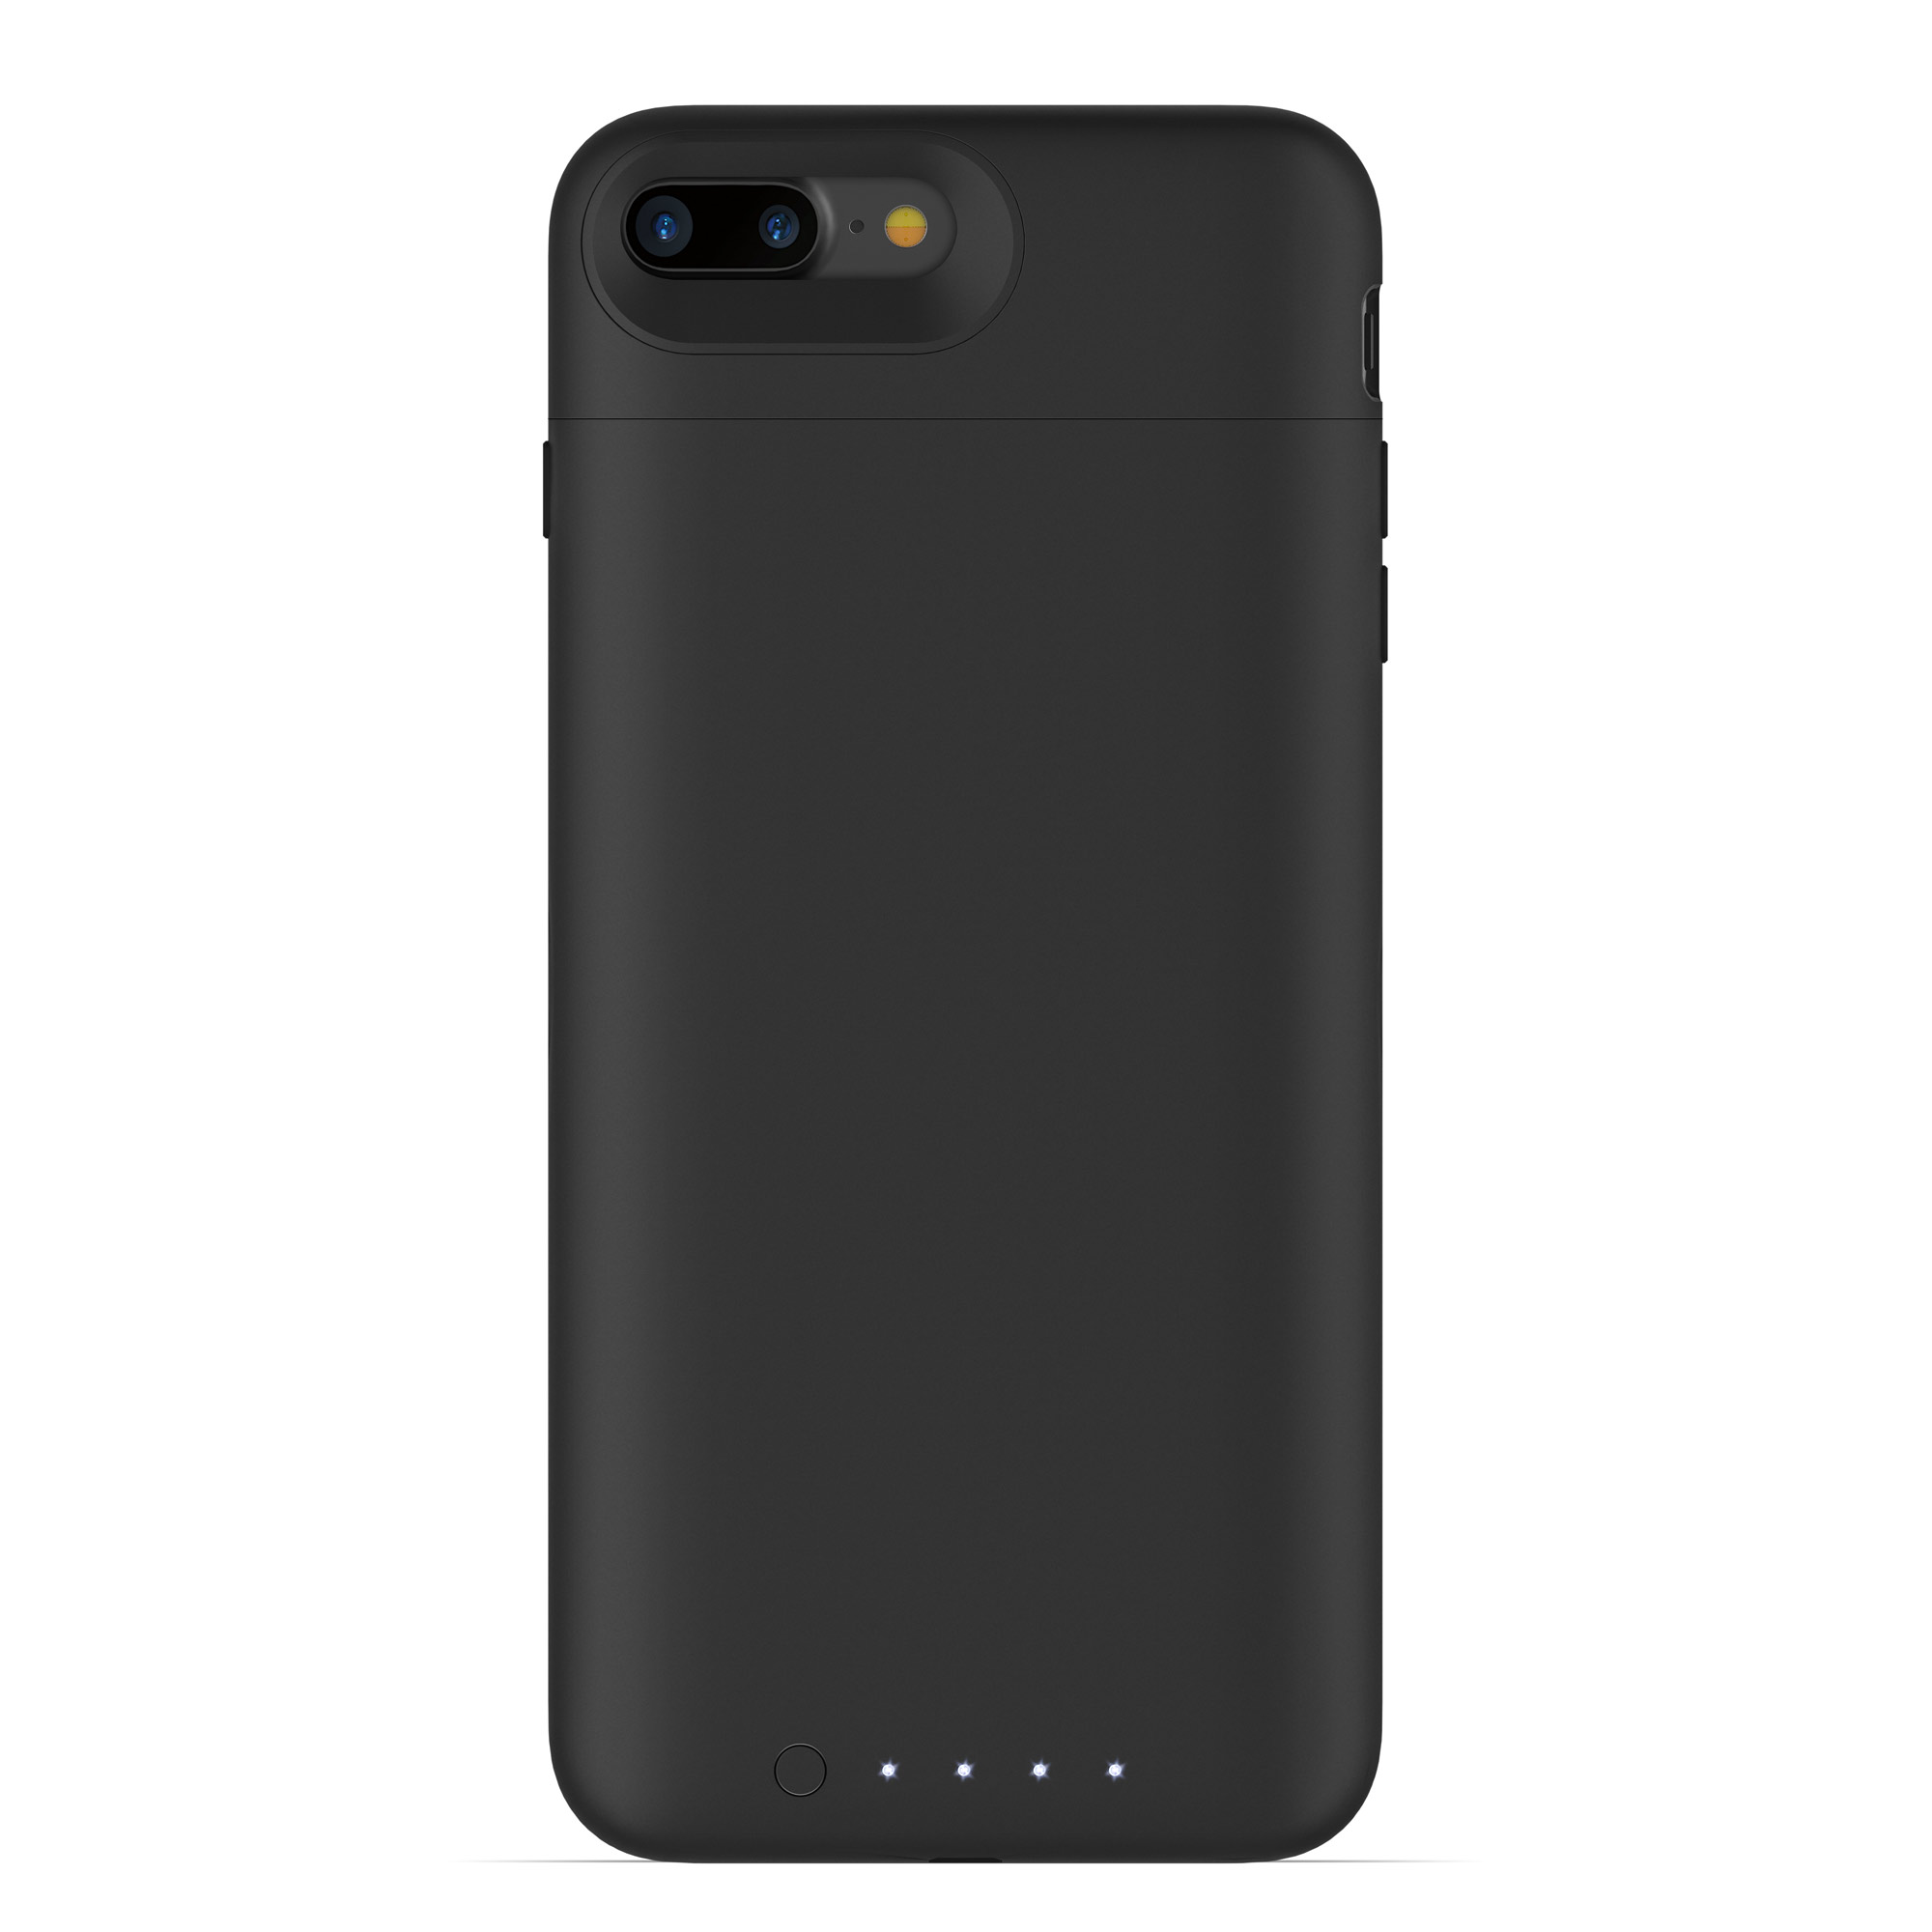 2018年8月25日購入場所supreme mophie iPhone 8 plus black 黒